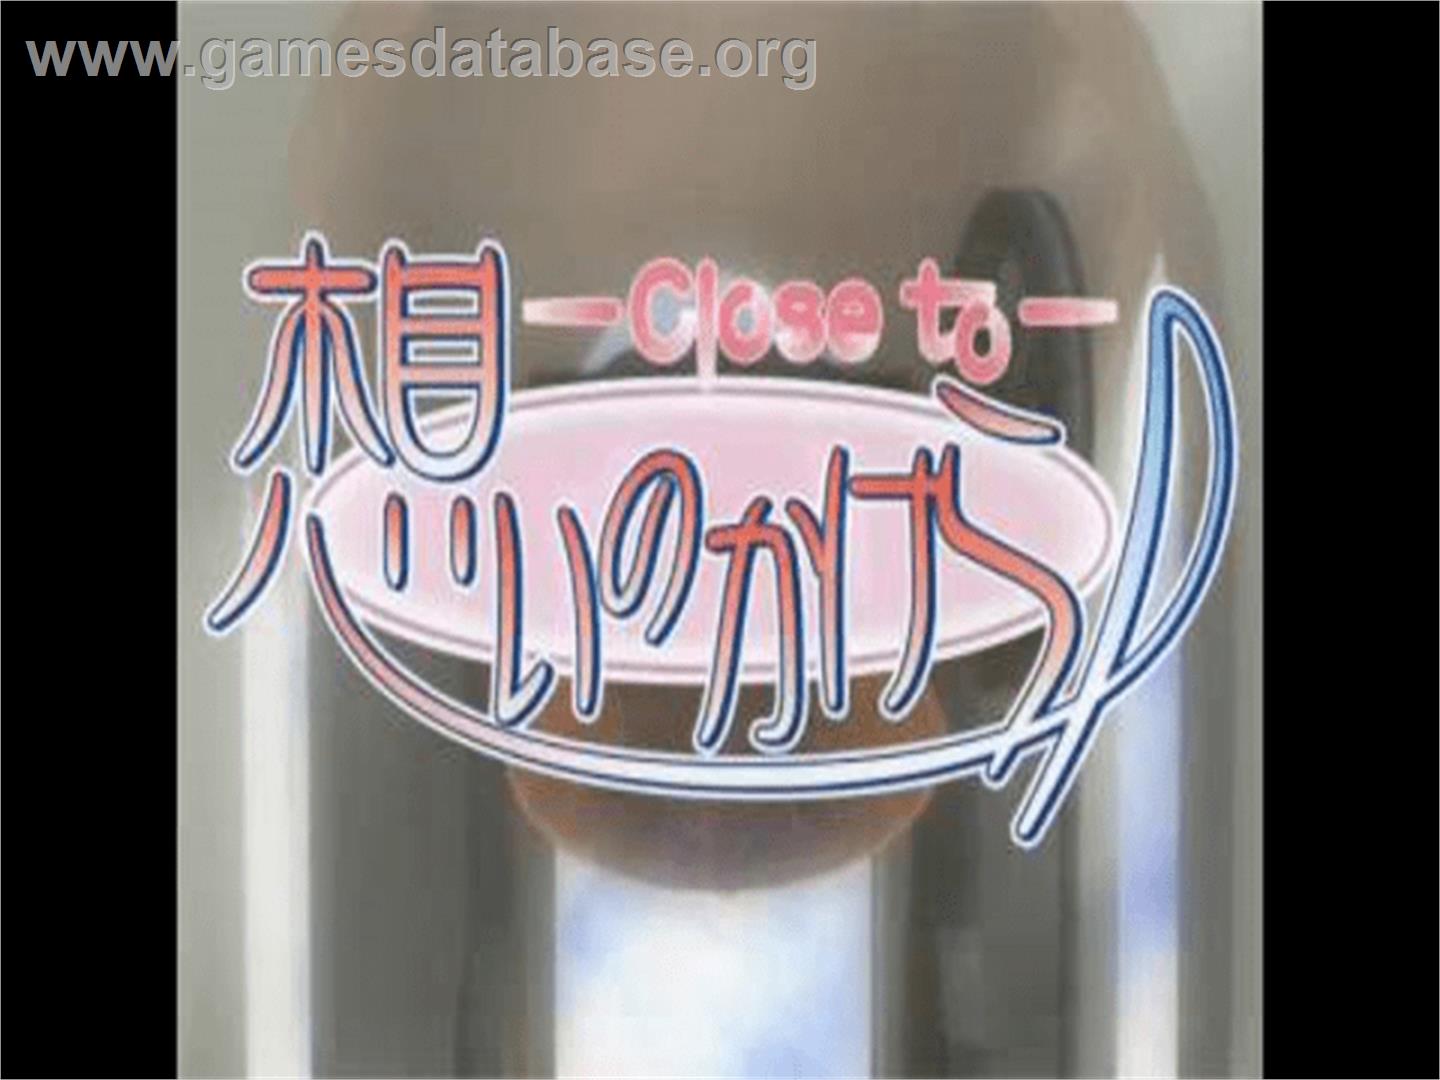 Close To: Inori no Oka - Sega Dreamcast - Artwork - Title Screen